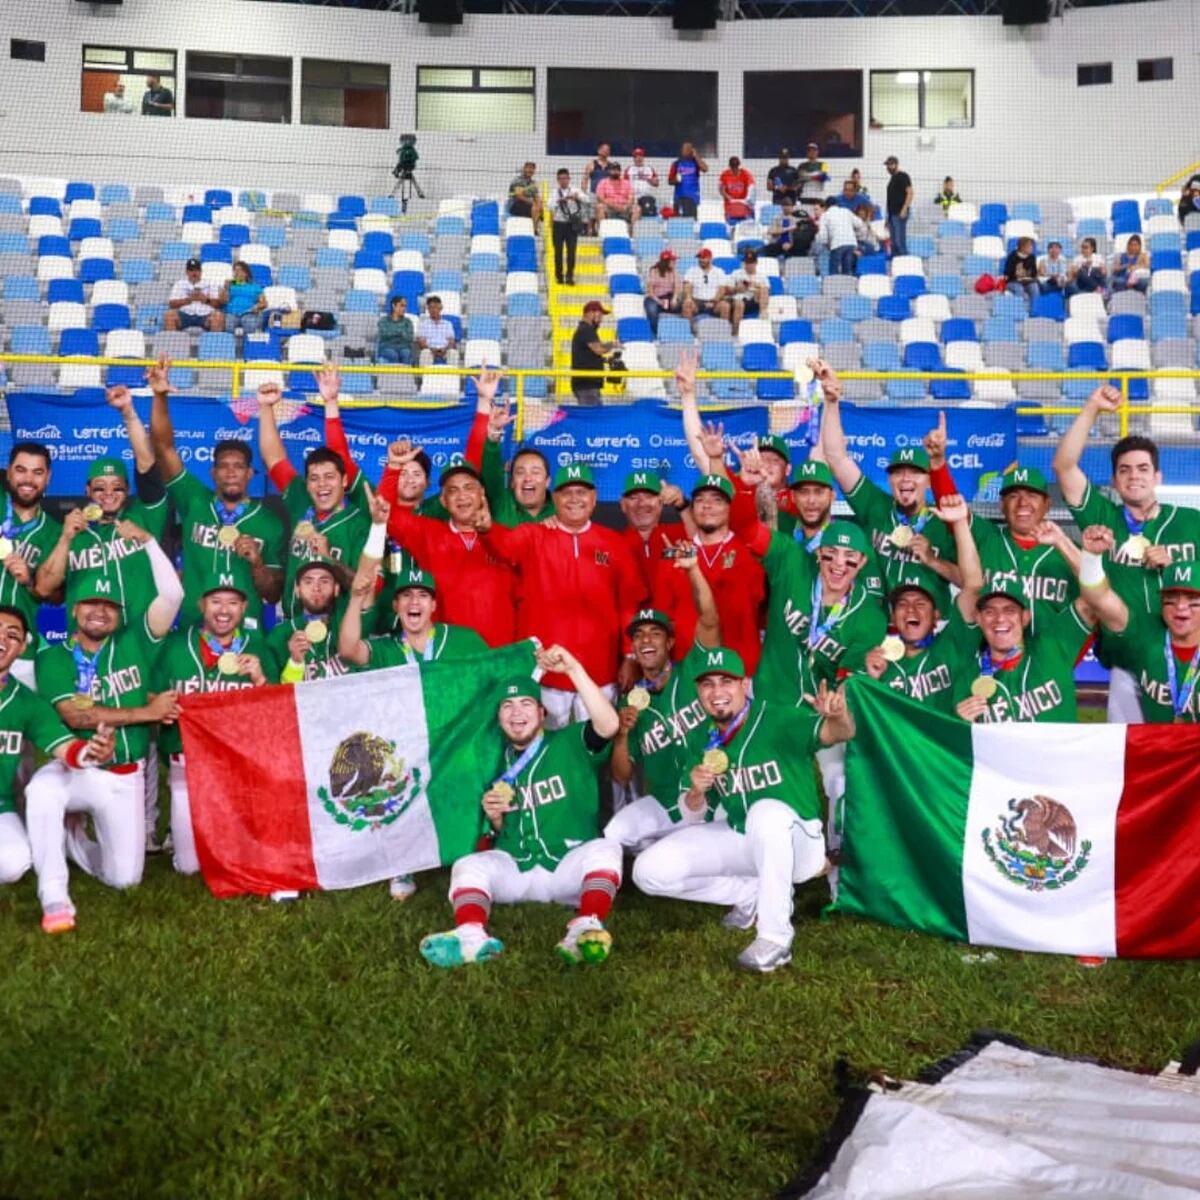 MexicoBeis: Primer juego de preparación de la Selección Mexicana de Beisbol